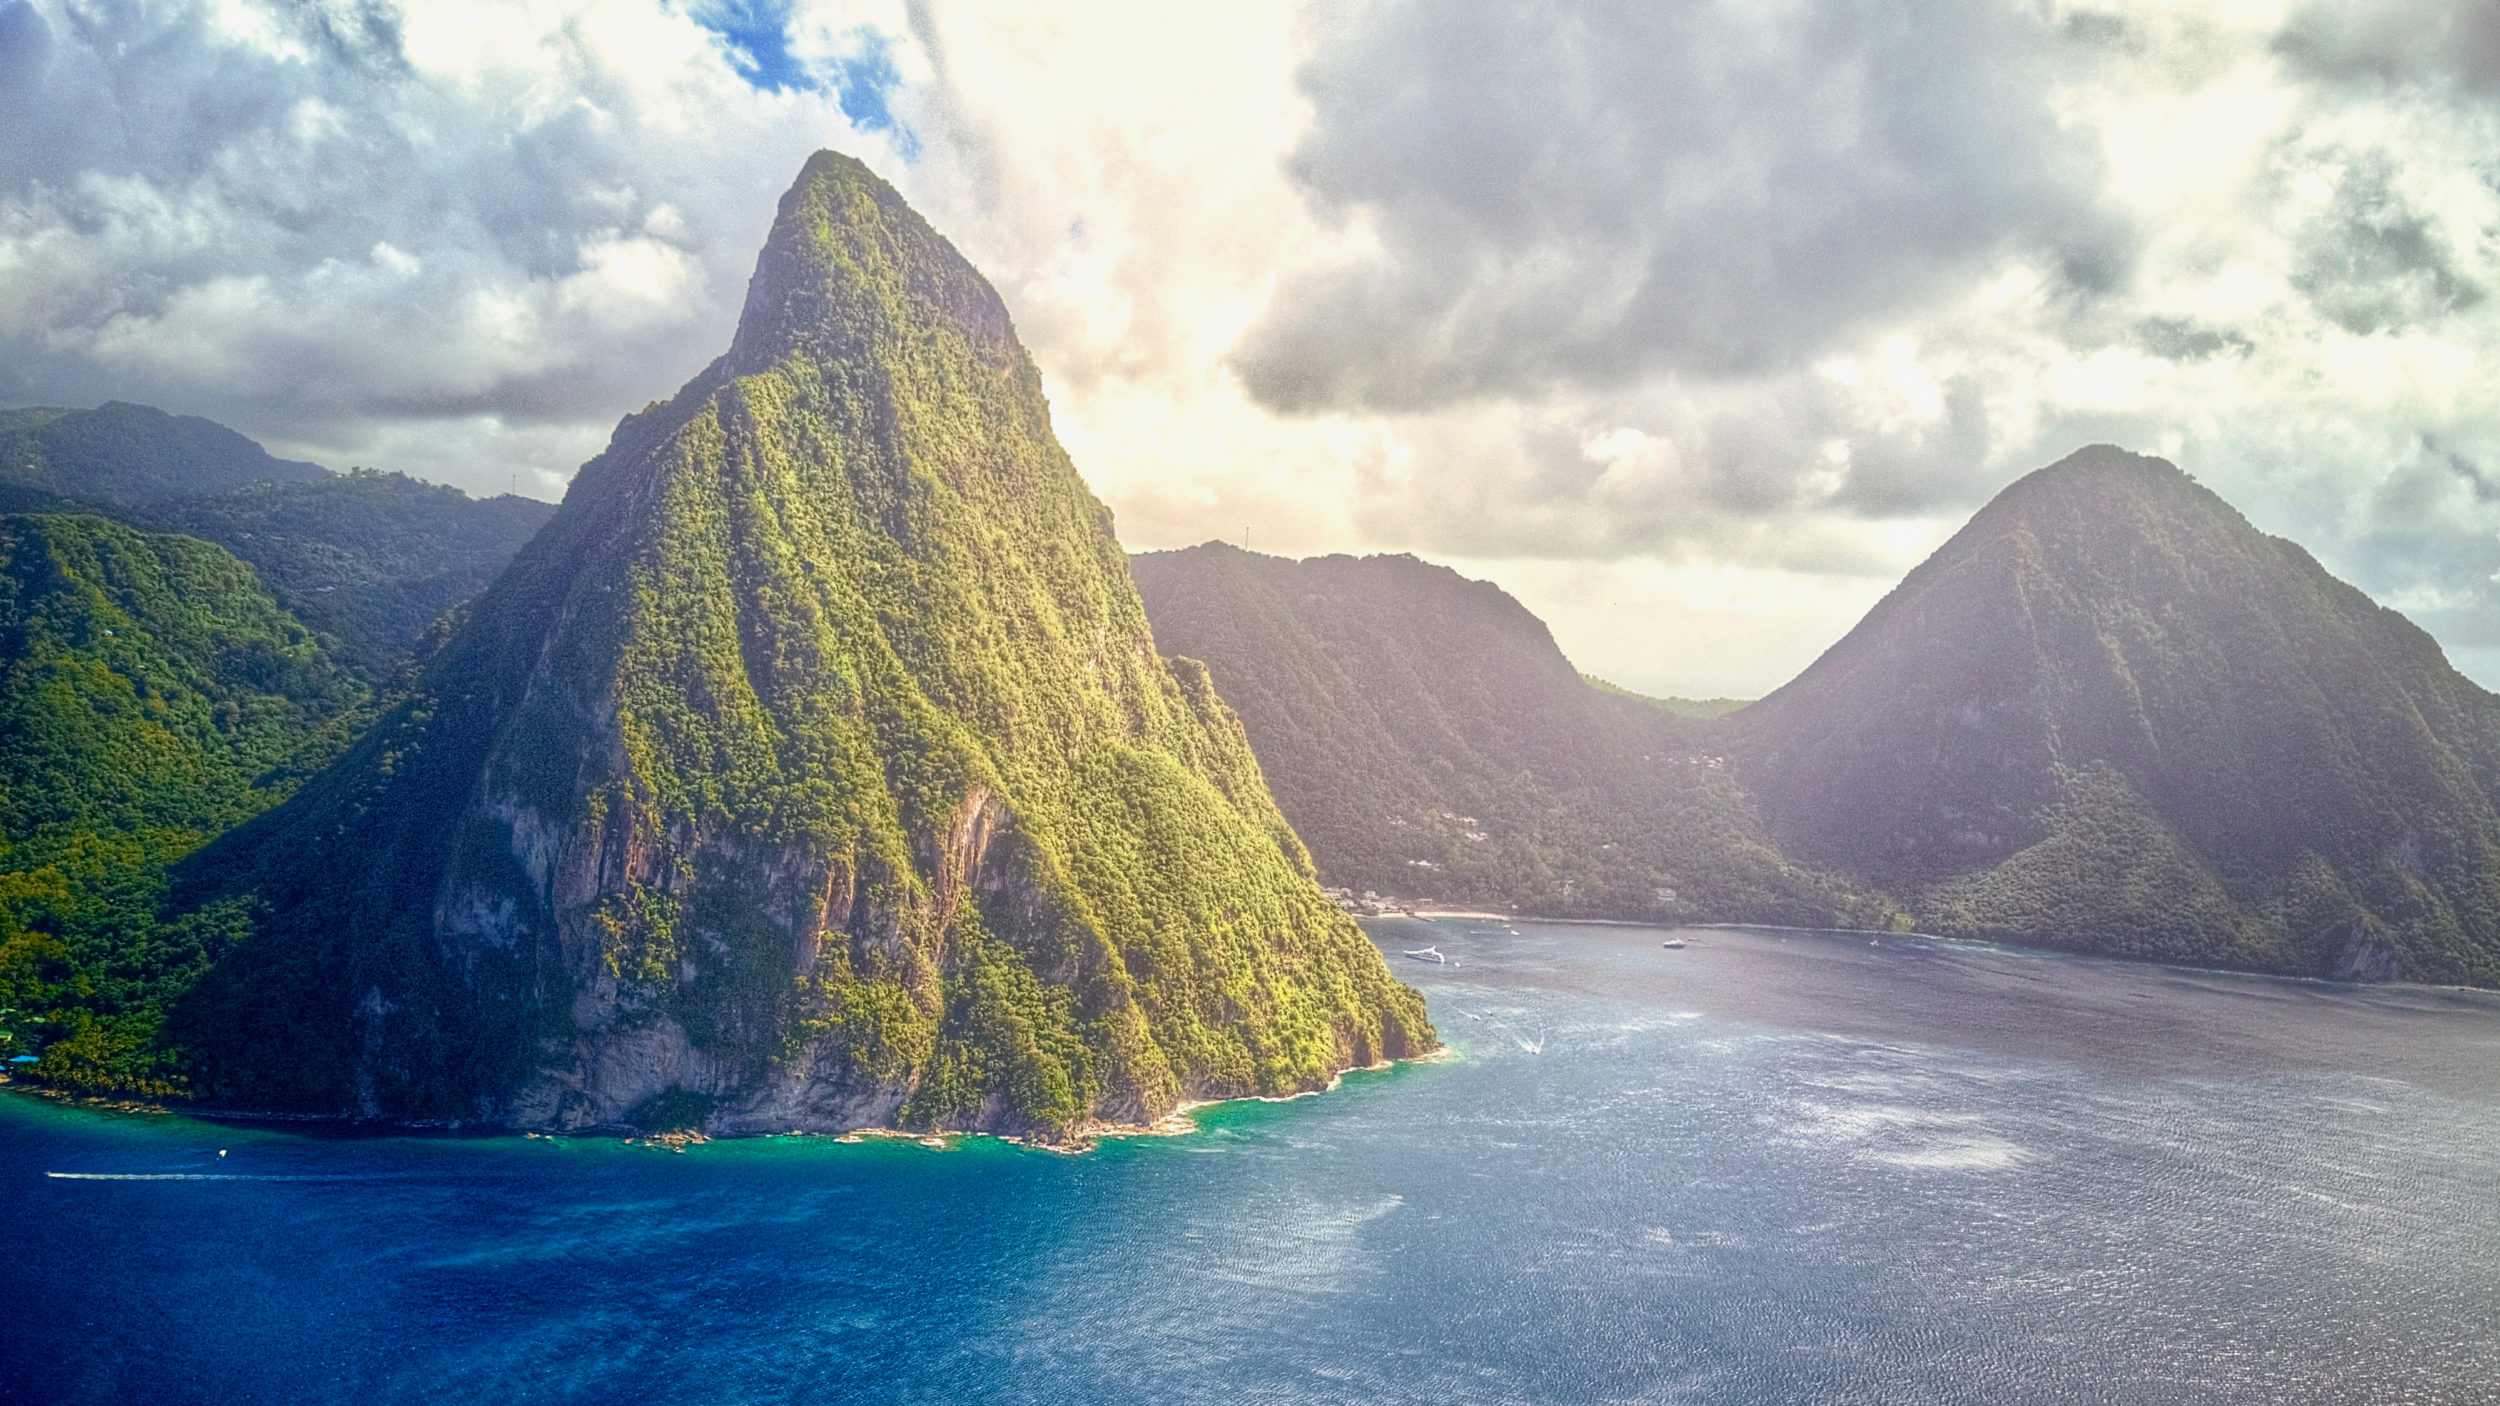 St. Lucia [Shutterstock]